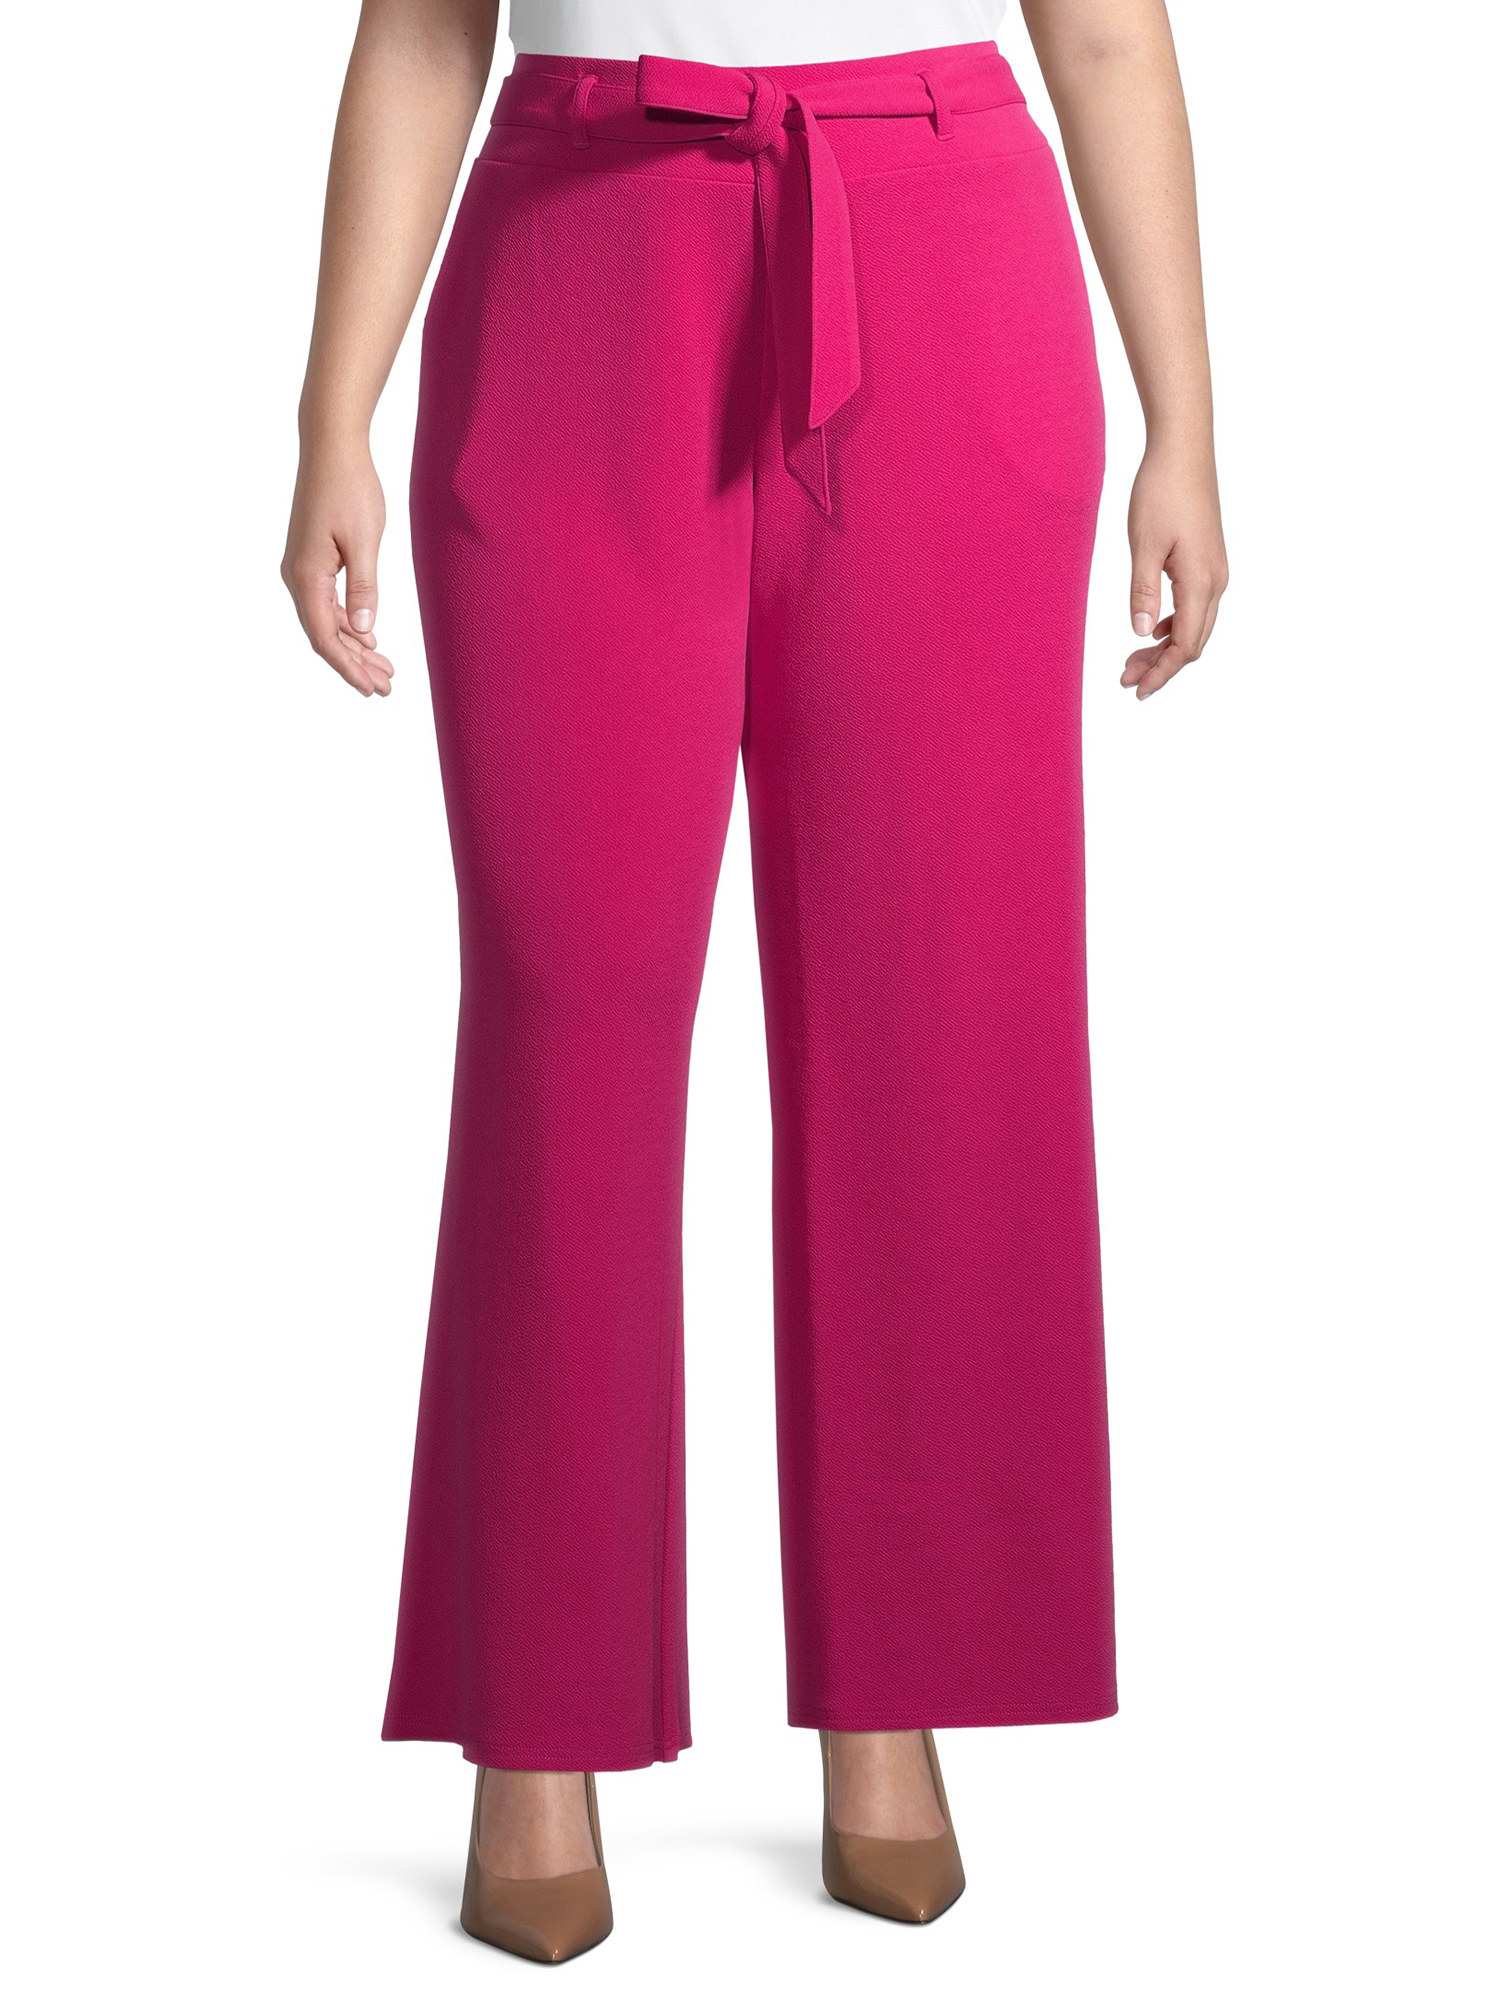 Model wearing bright pink wide-legged pants